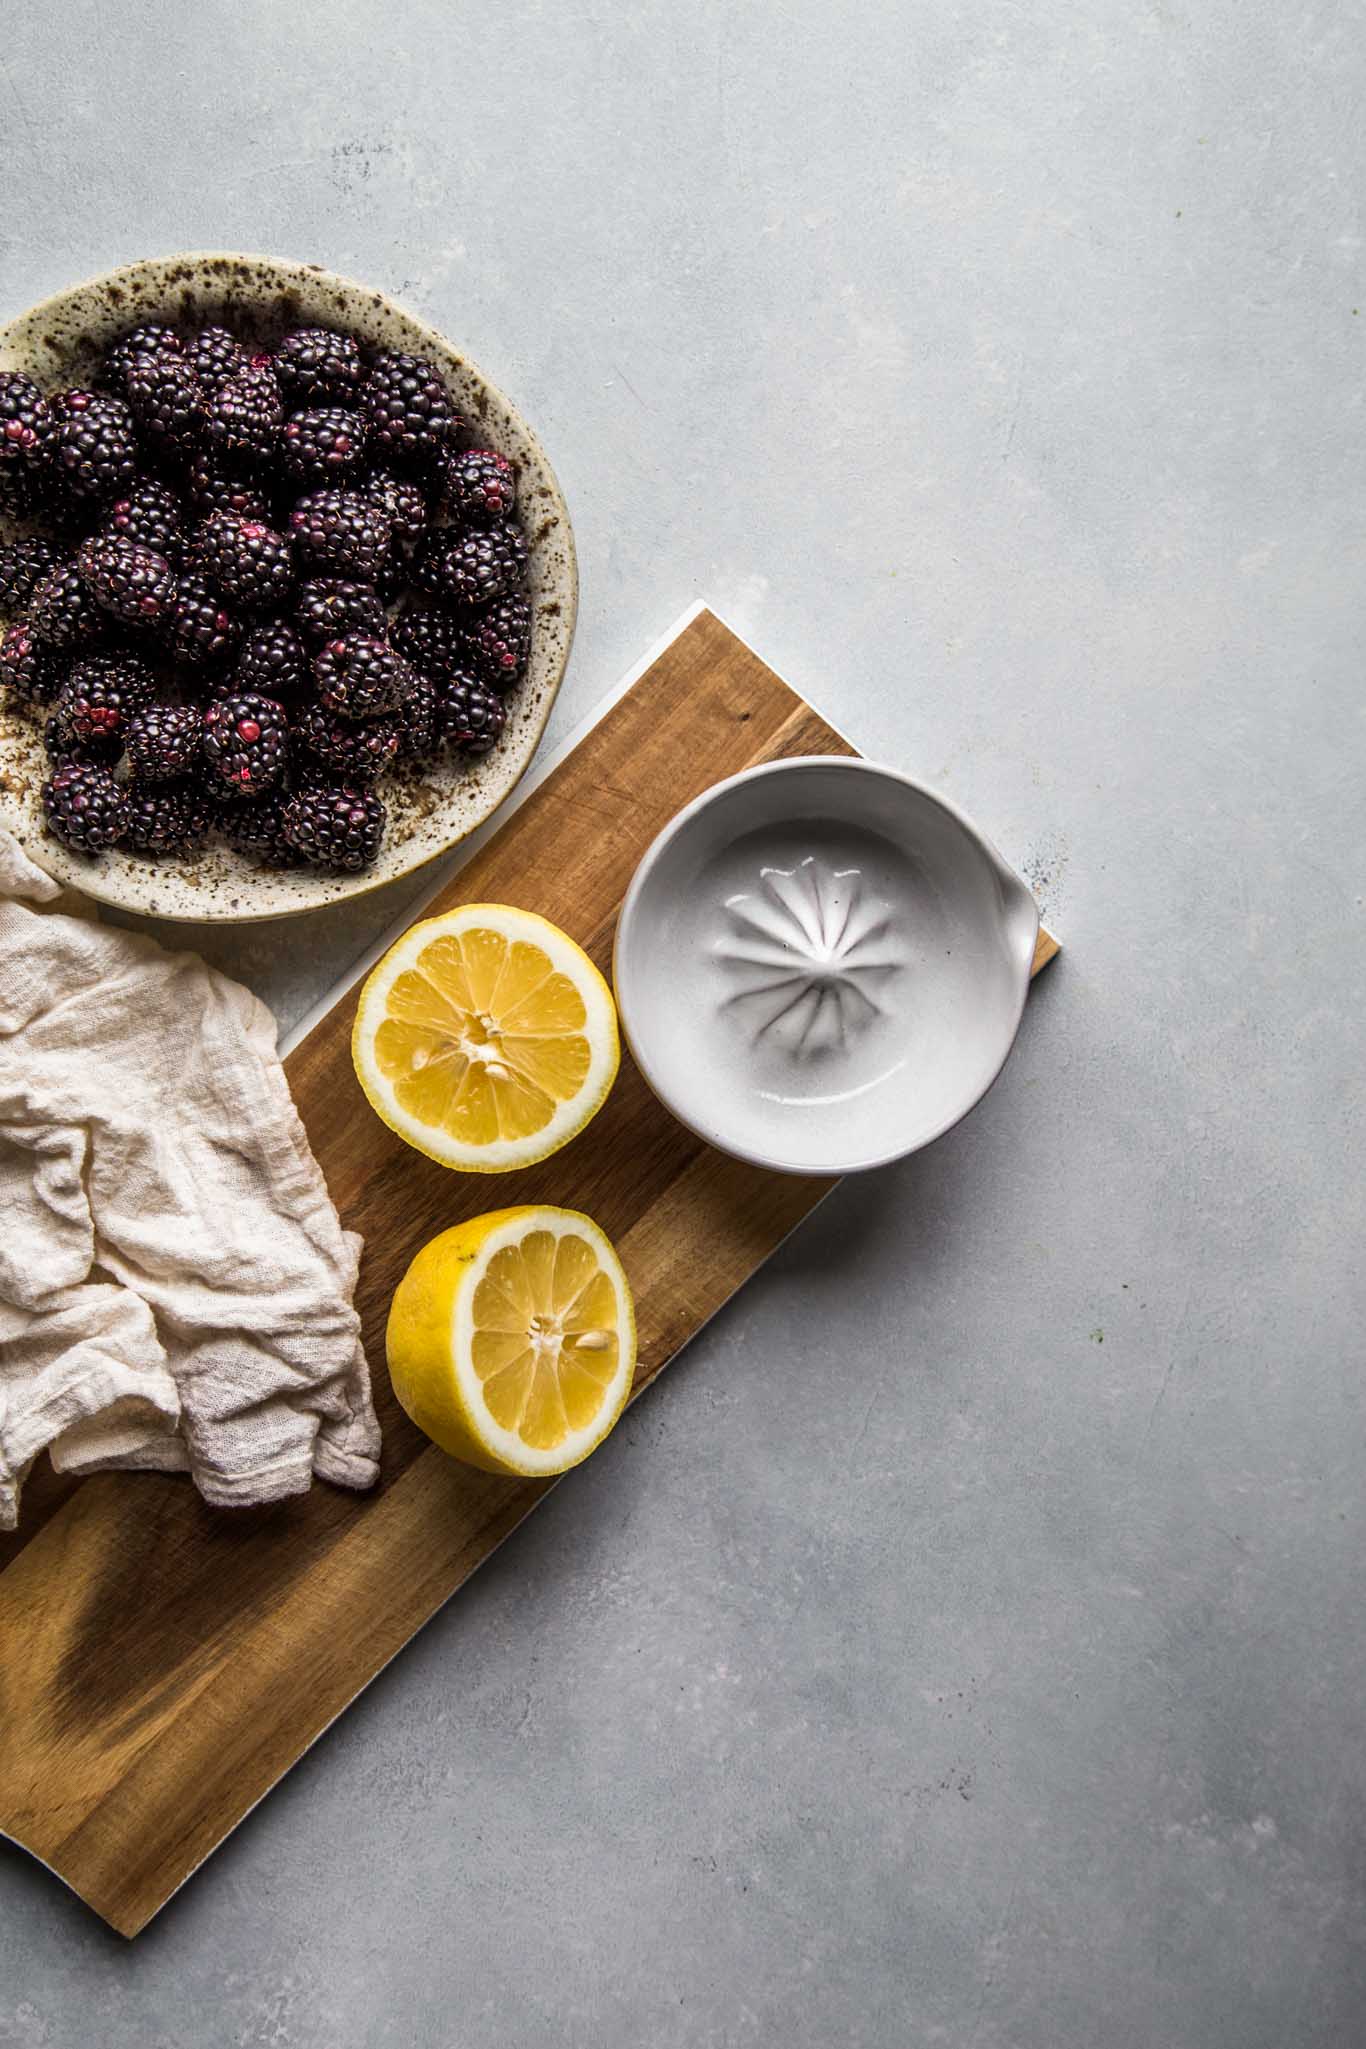 Ingredients for blackberry galette - blackberries and lemon on cutting board.